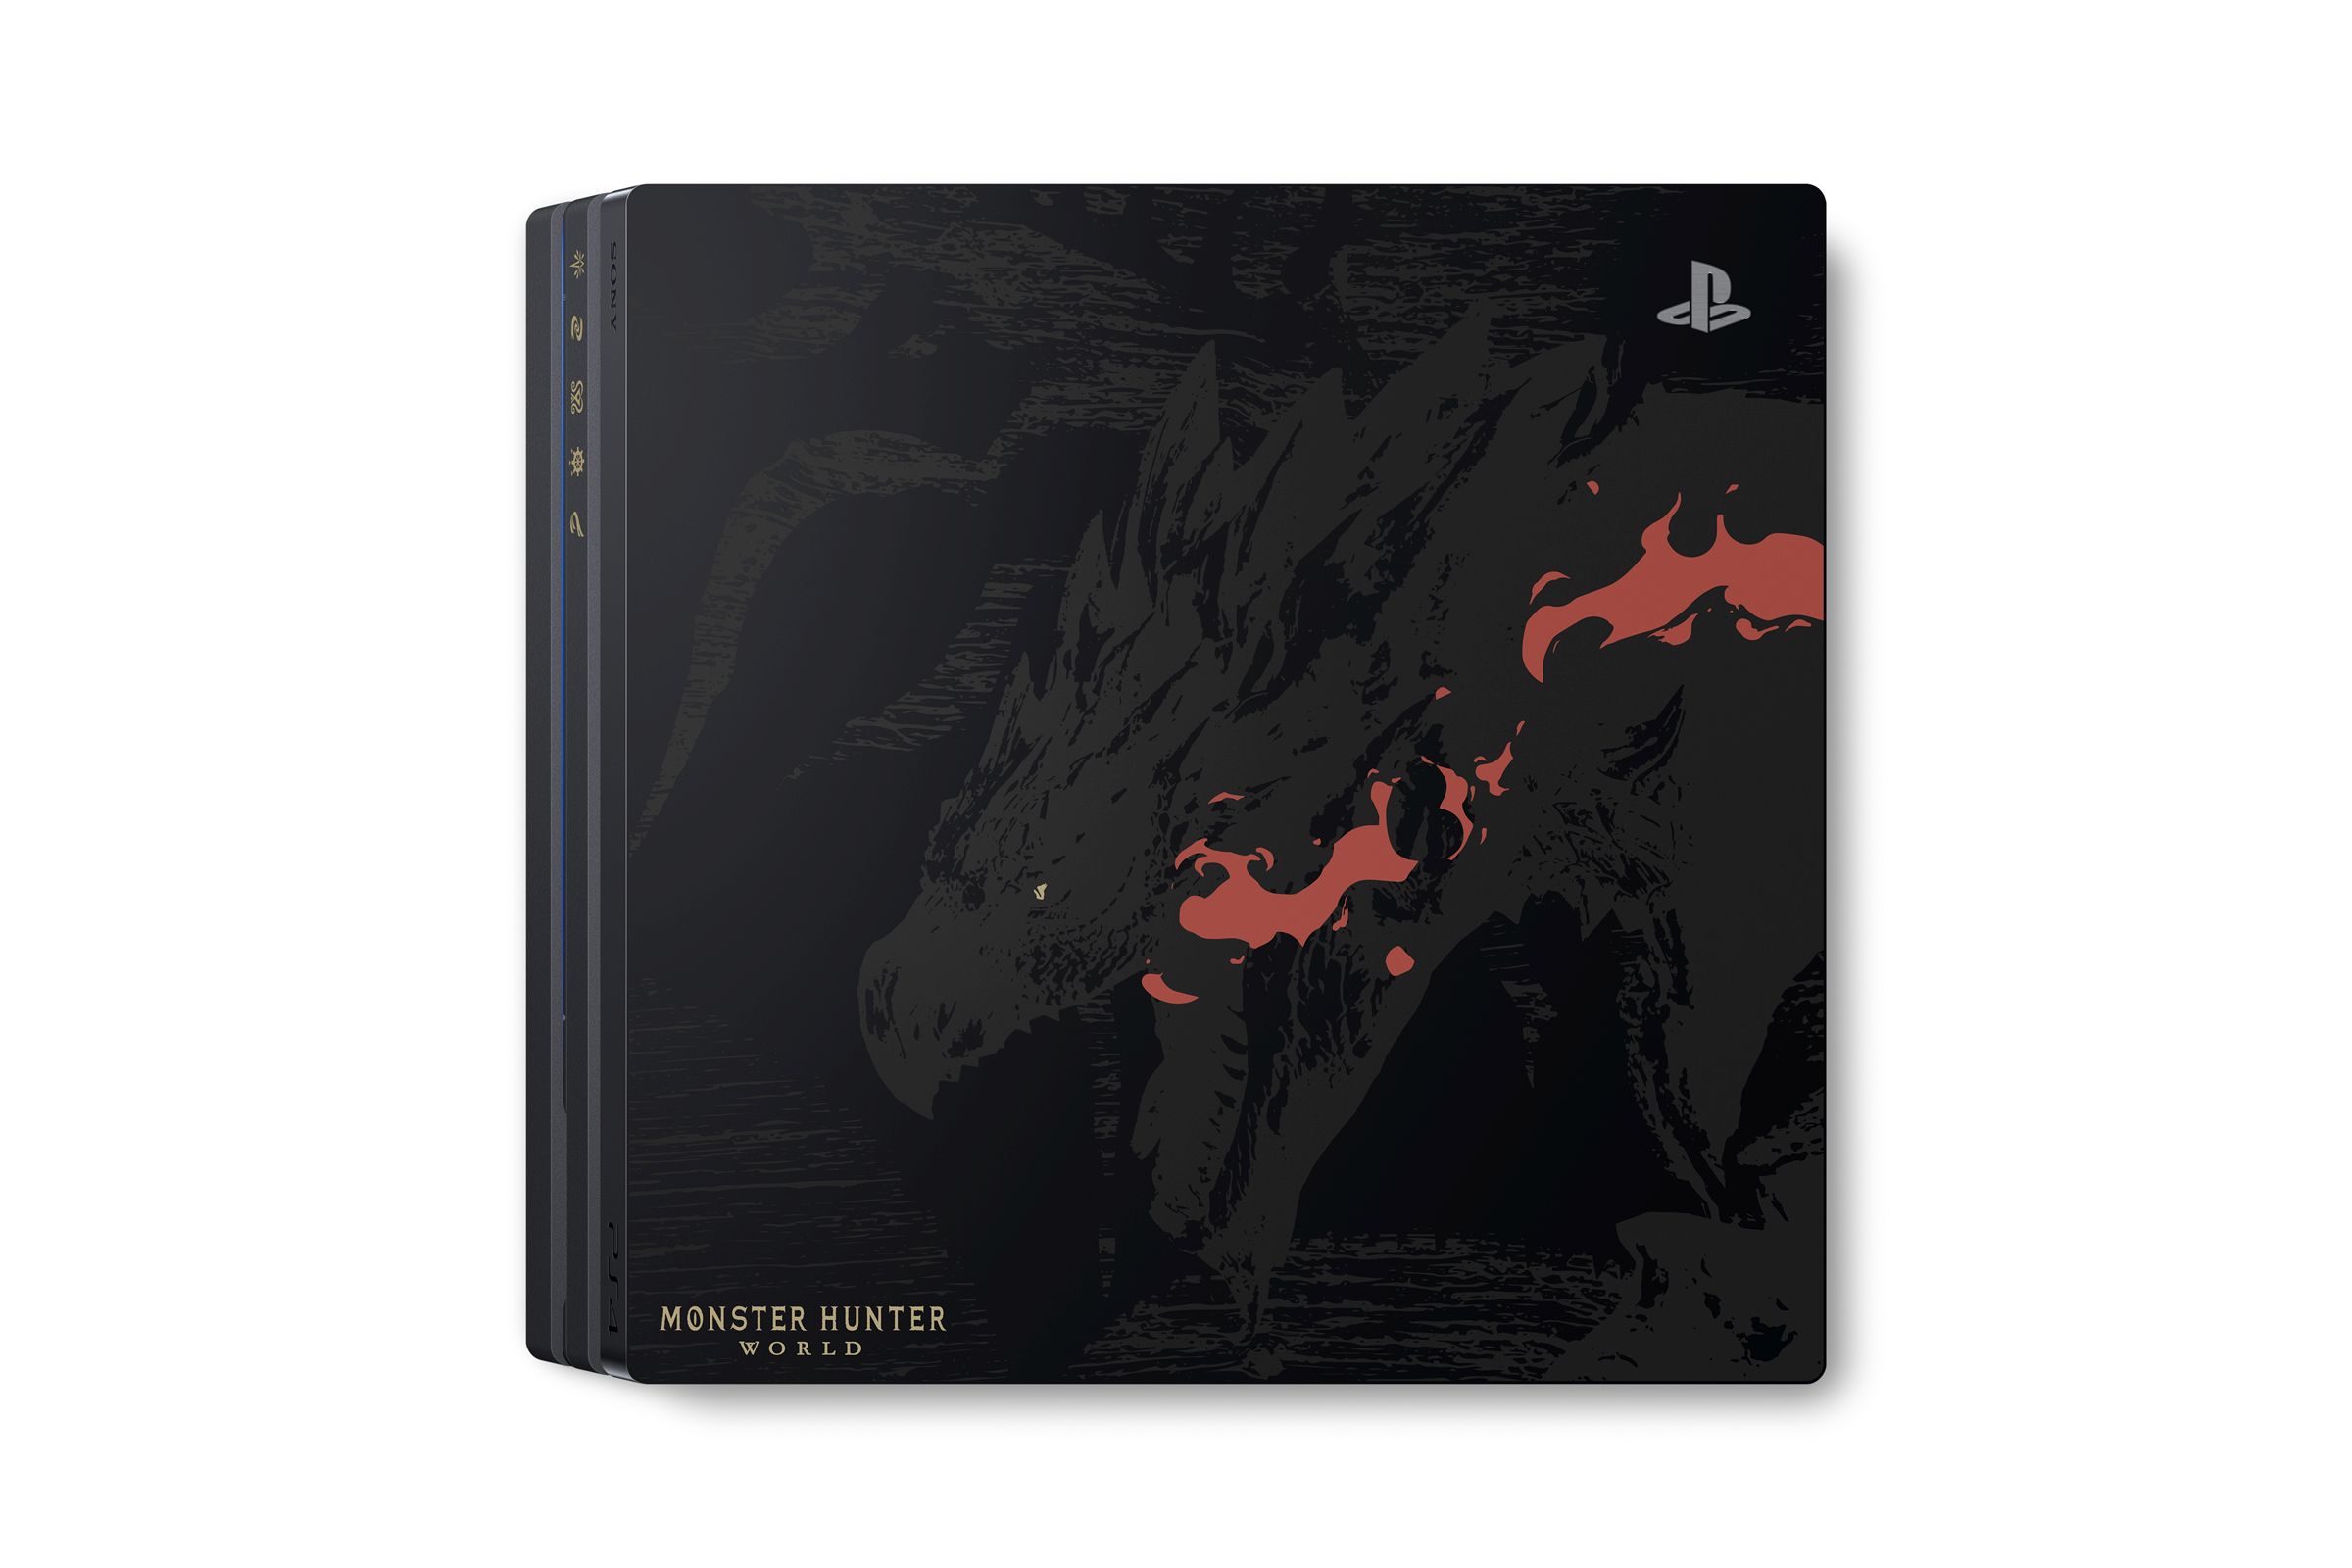 Monster Hunter World Rathalos Edition PS4 Pro